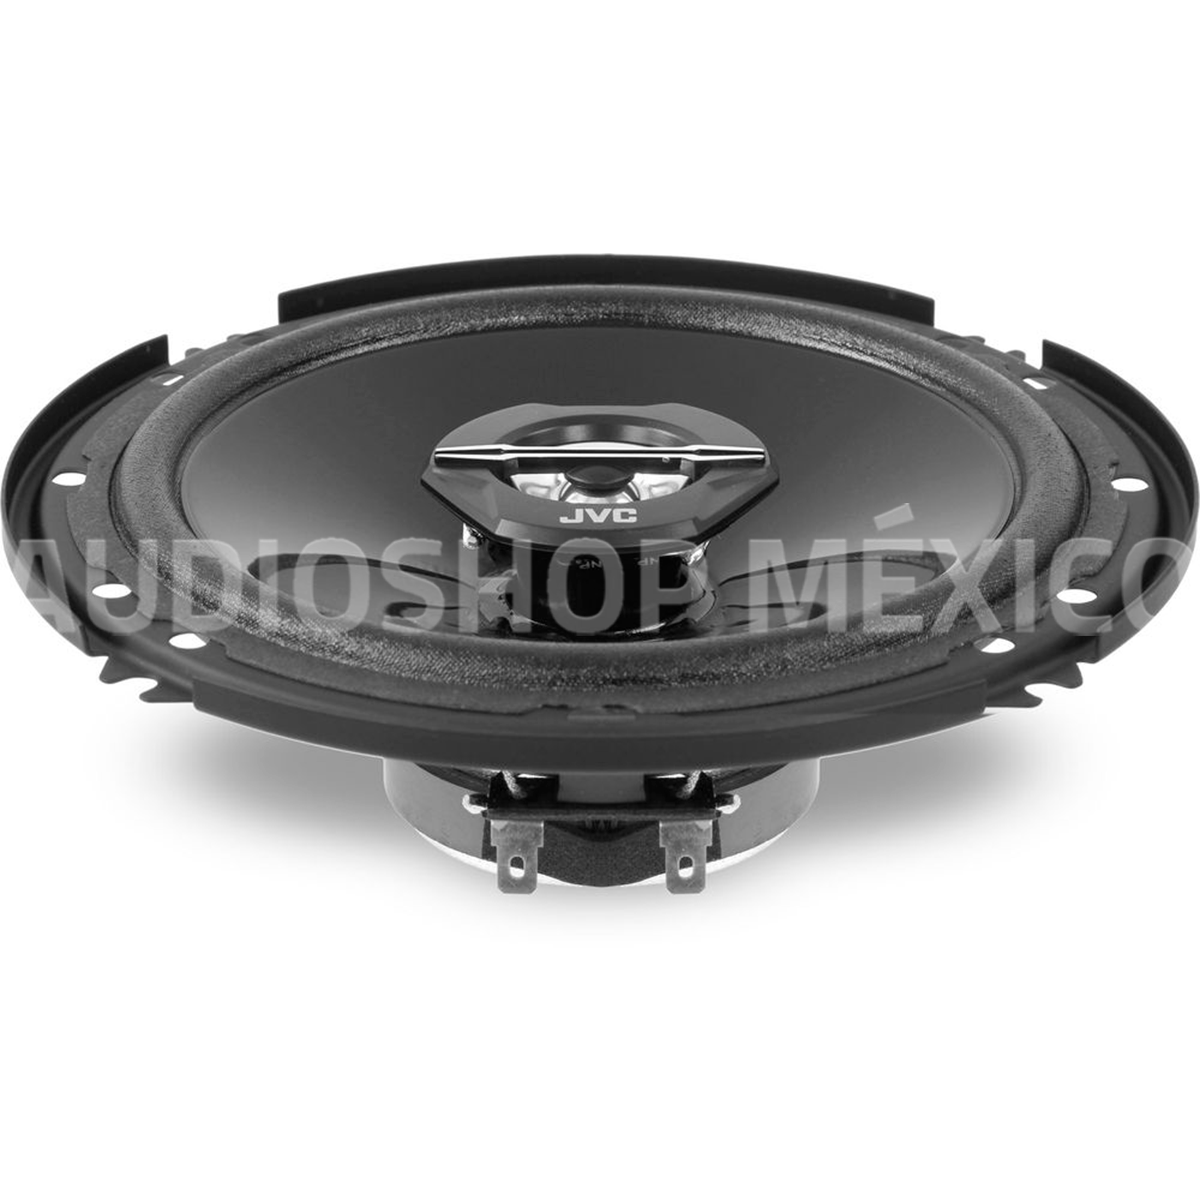 Bocinas 6.5 Pulgadas Auto Jvc Csj-620 300w 30w Rms 2 Vias - Audioshop México lo mejor en Car Audio en México -  JVC